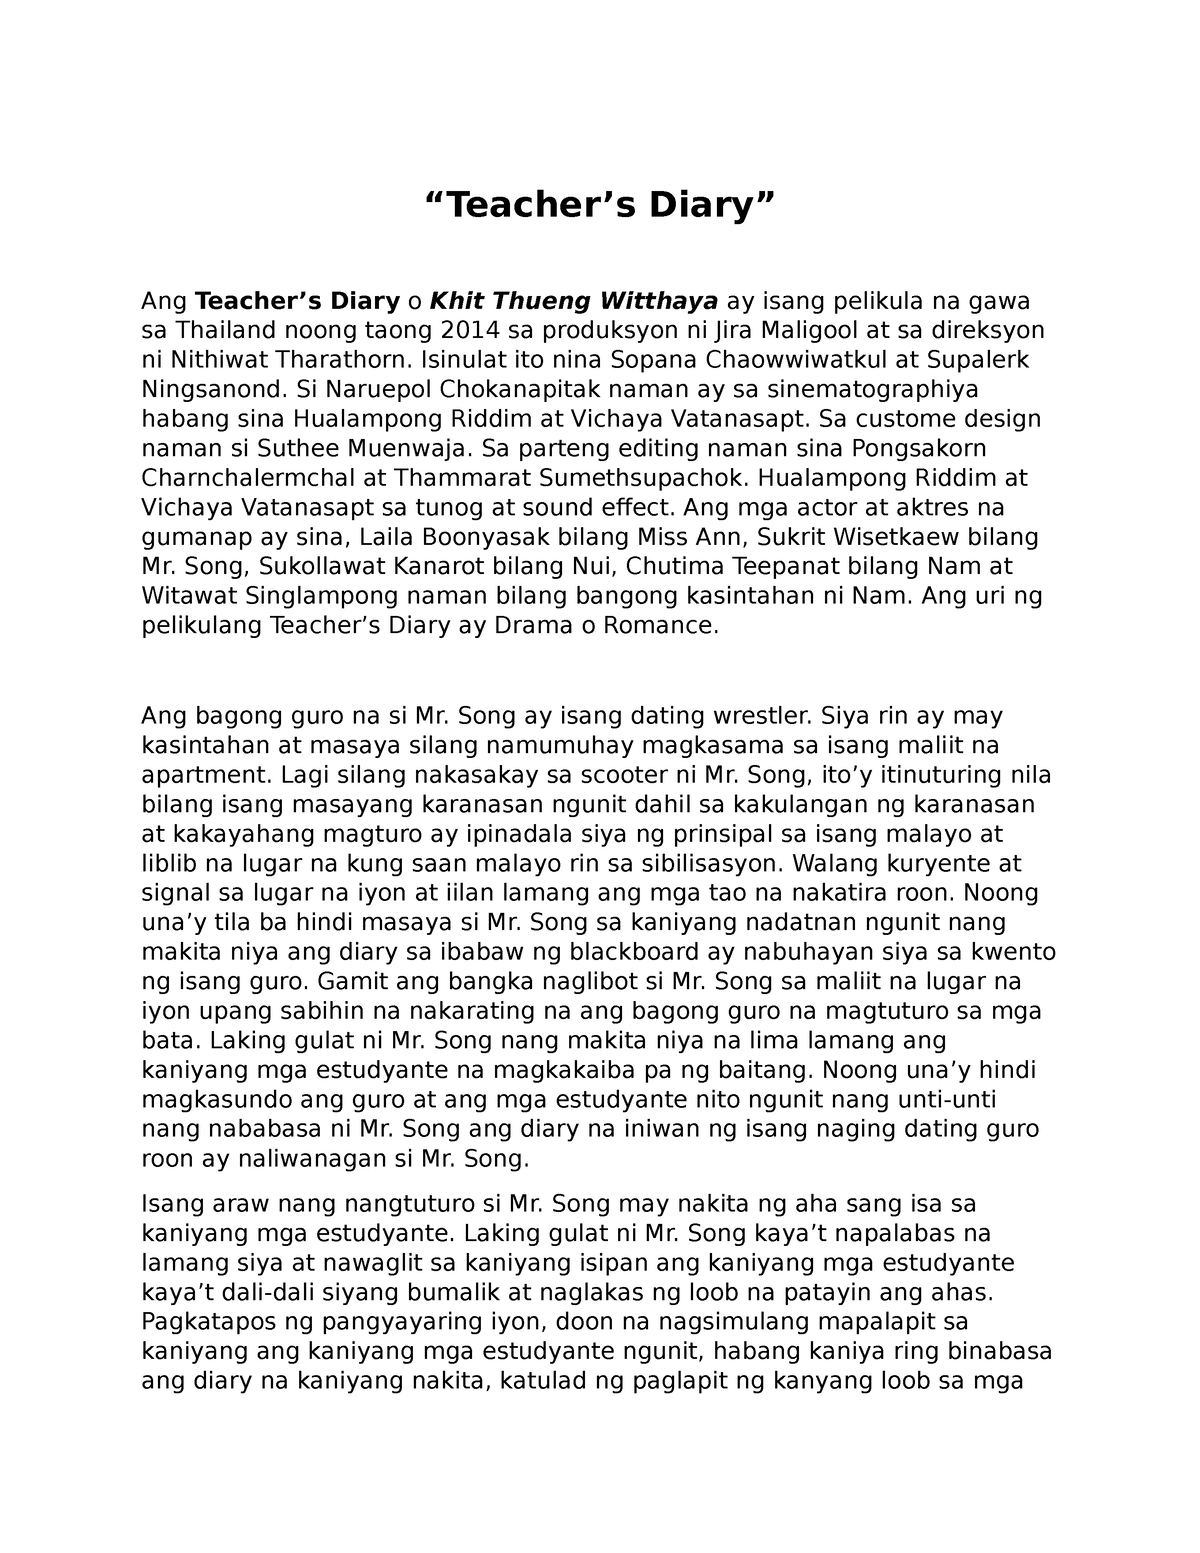 reaction-paper-teacher-s-diary-teacher-s-diary-ang-teacher-s